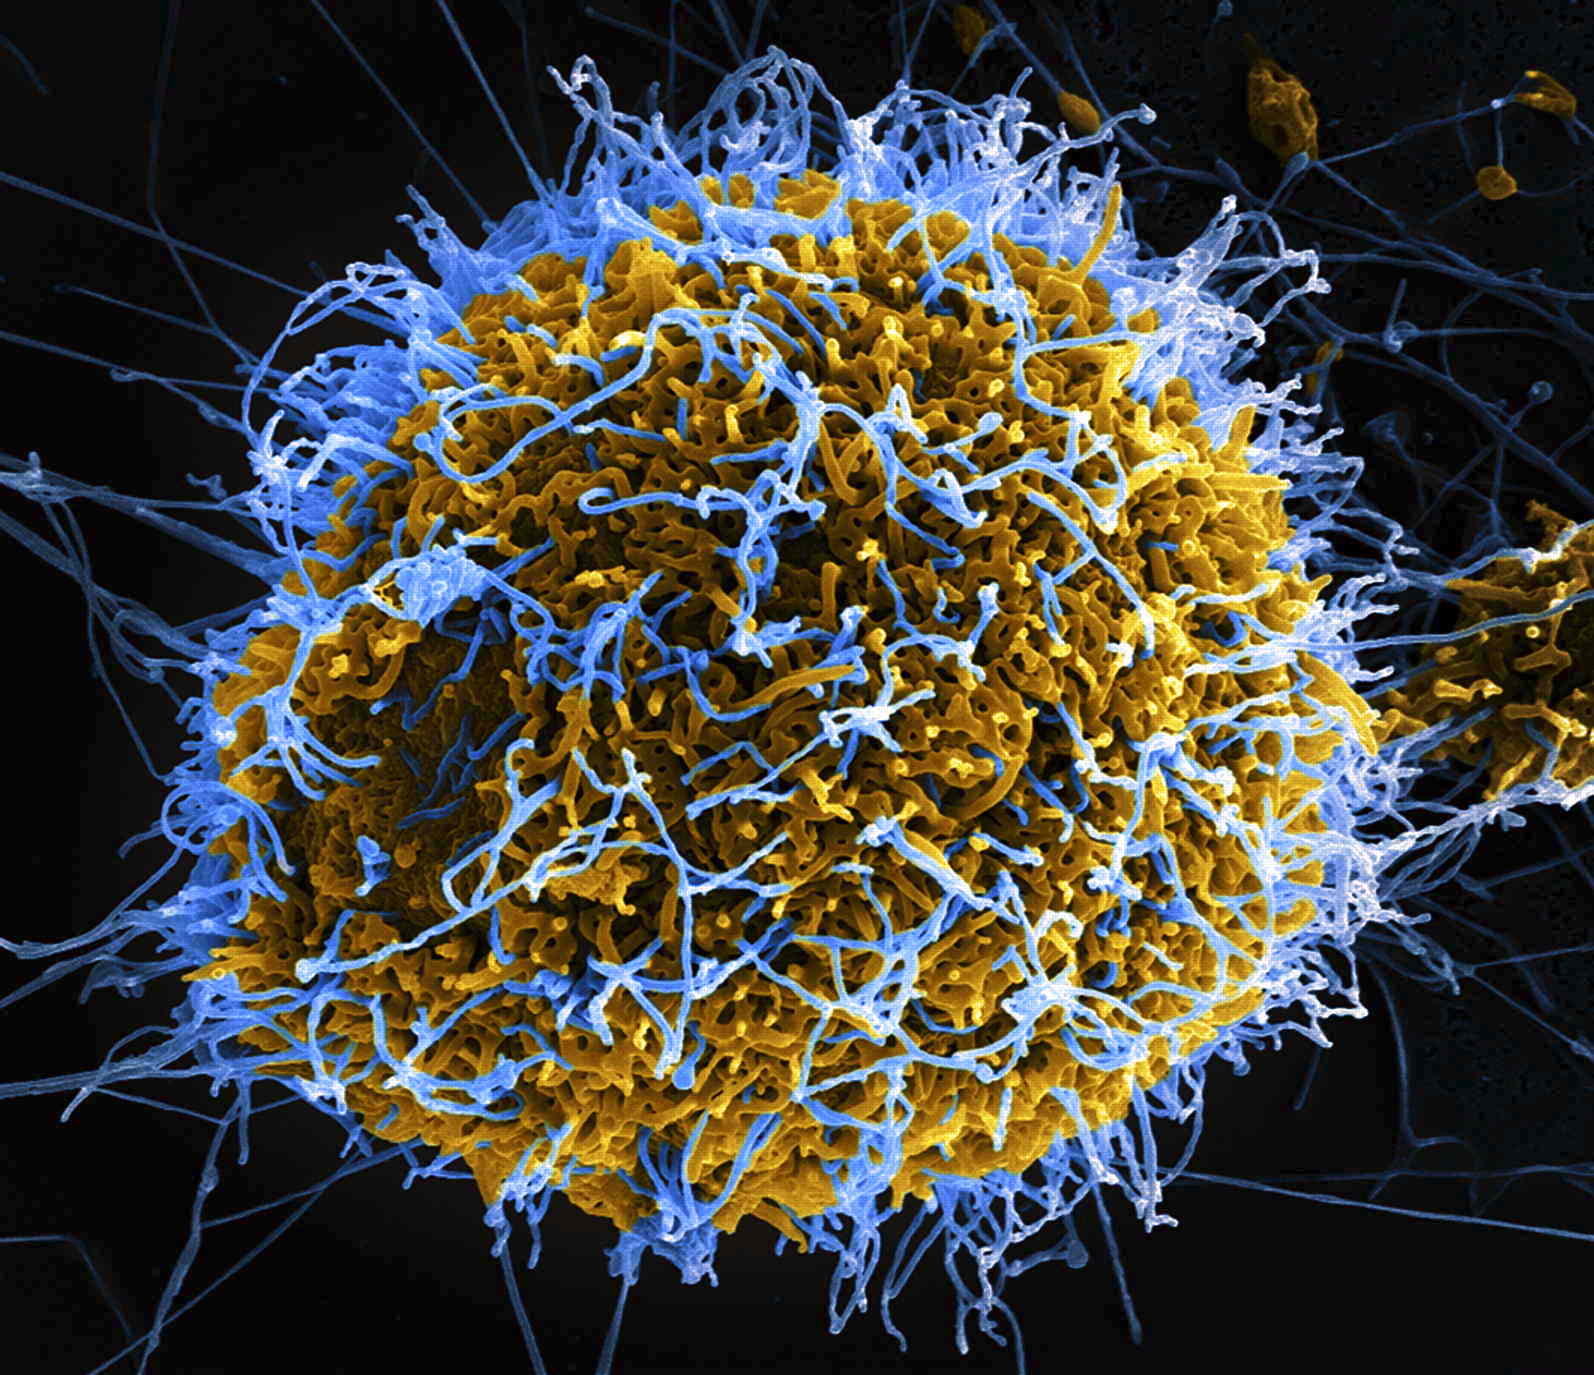 Ebola_Virus_Particles_ansicht_killer_Afrika_Amerika_Forschung_Todmacher_Krankmacher